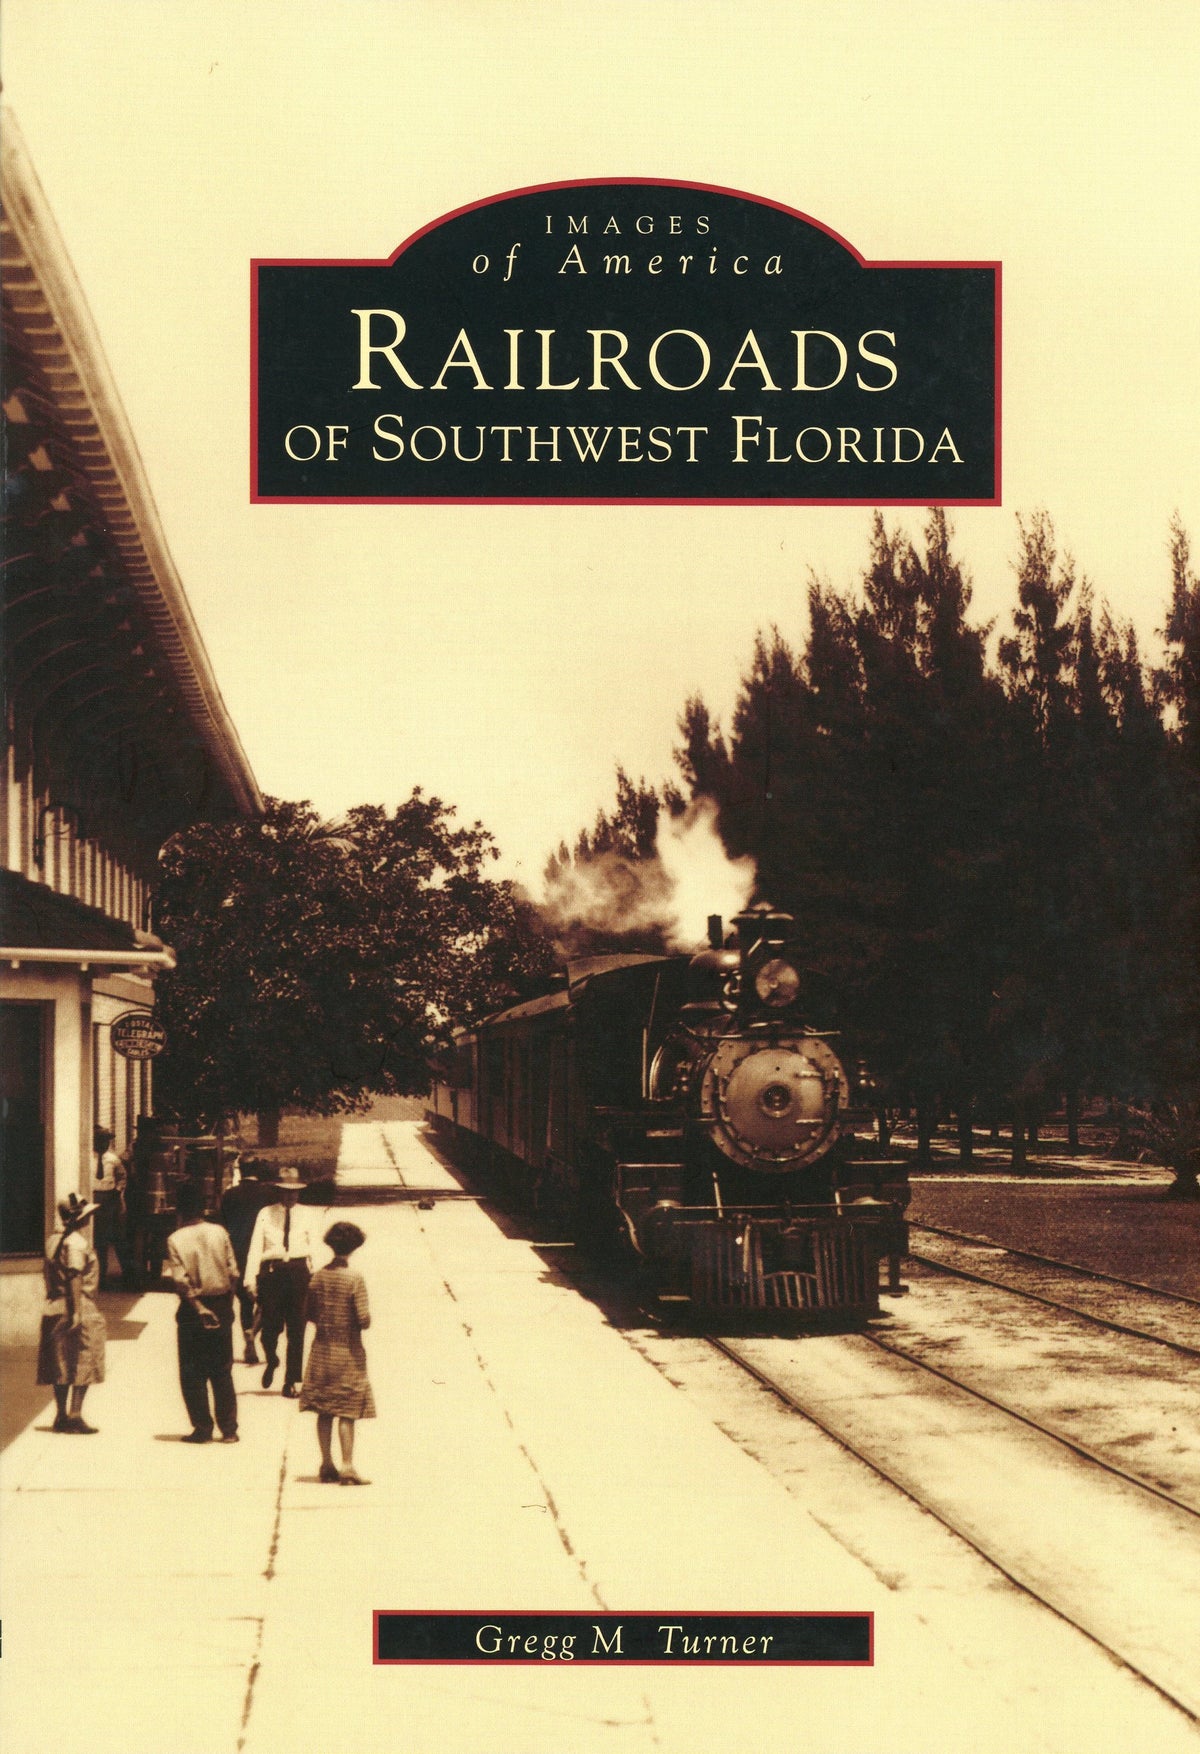 Images of America: Railroads of Southwest Florida